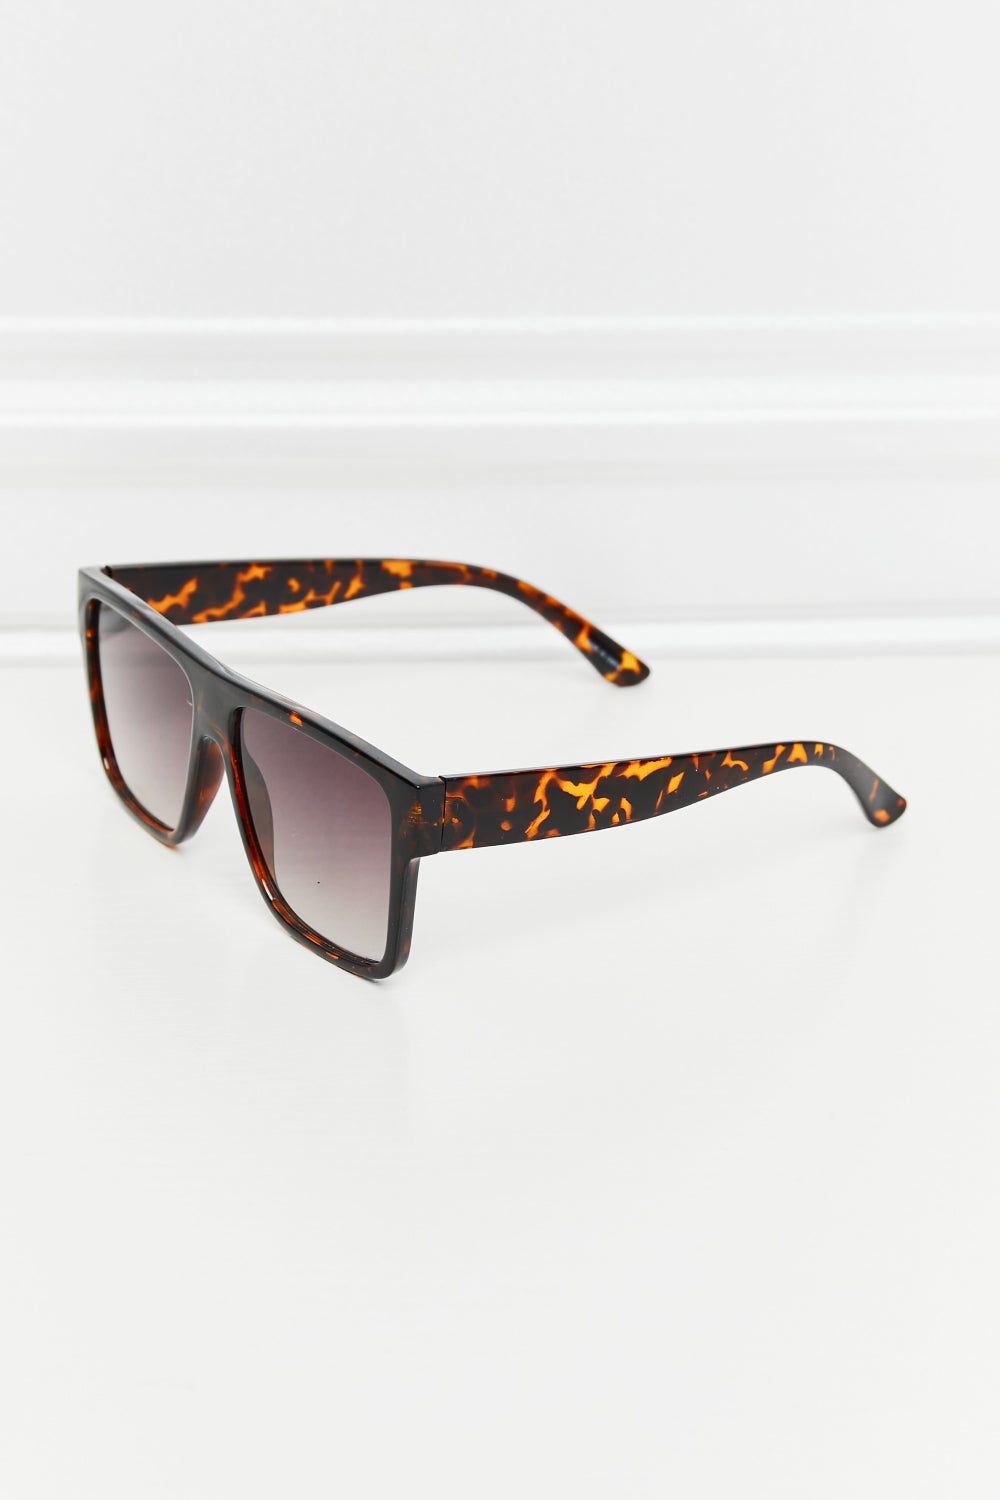 Tortoiseshell Square Full Rim Sunglasses - BEAUTY COSMOTICS SHOP